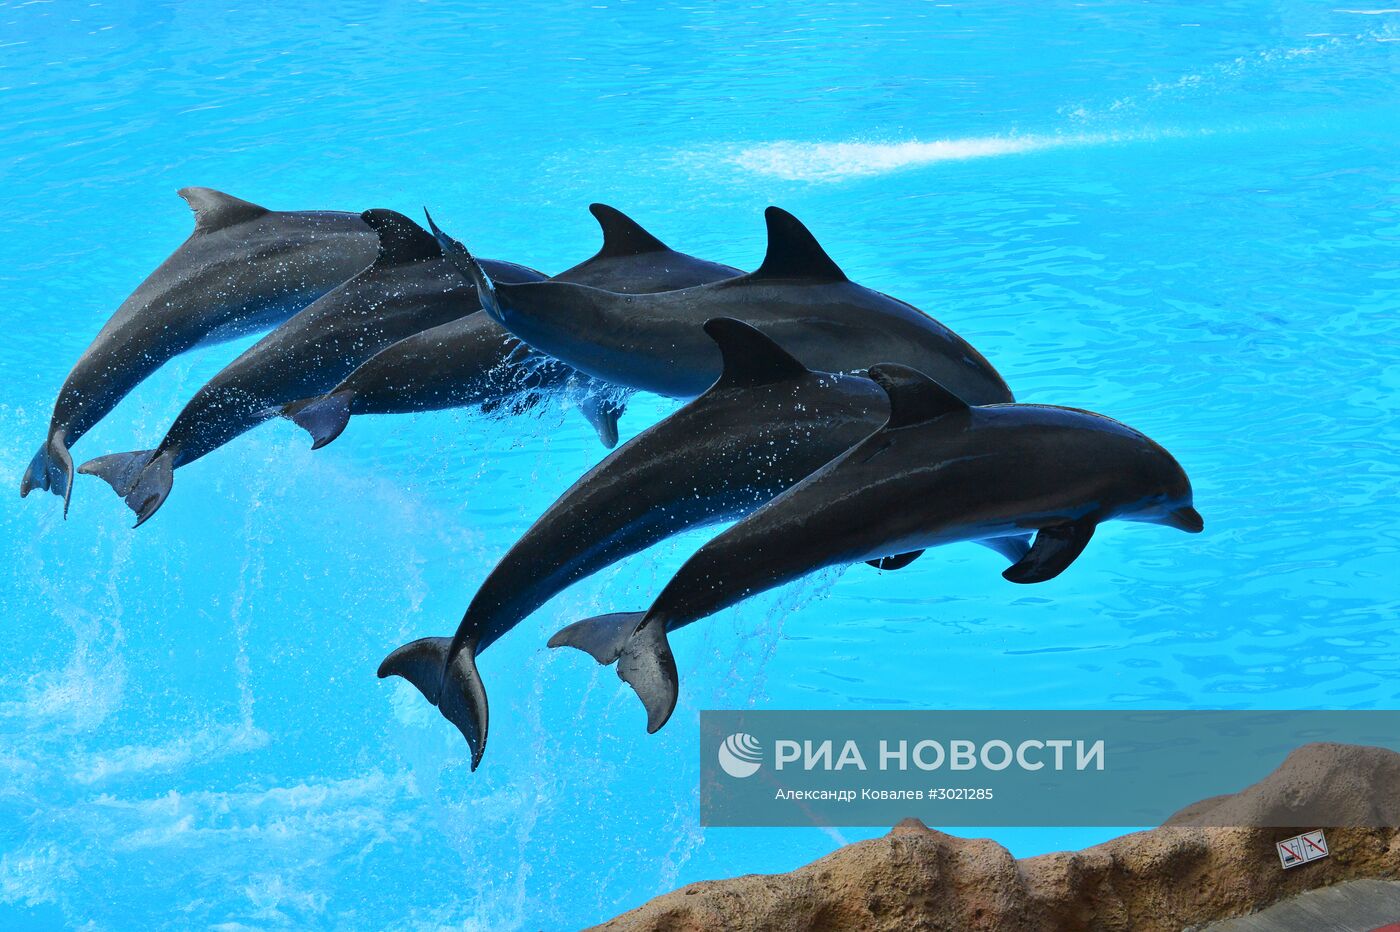 Шоу дельфинов в бассейне Лоро Парка (Loro Parque) на Тенерифе